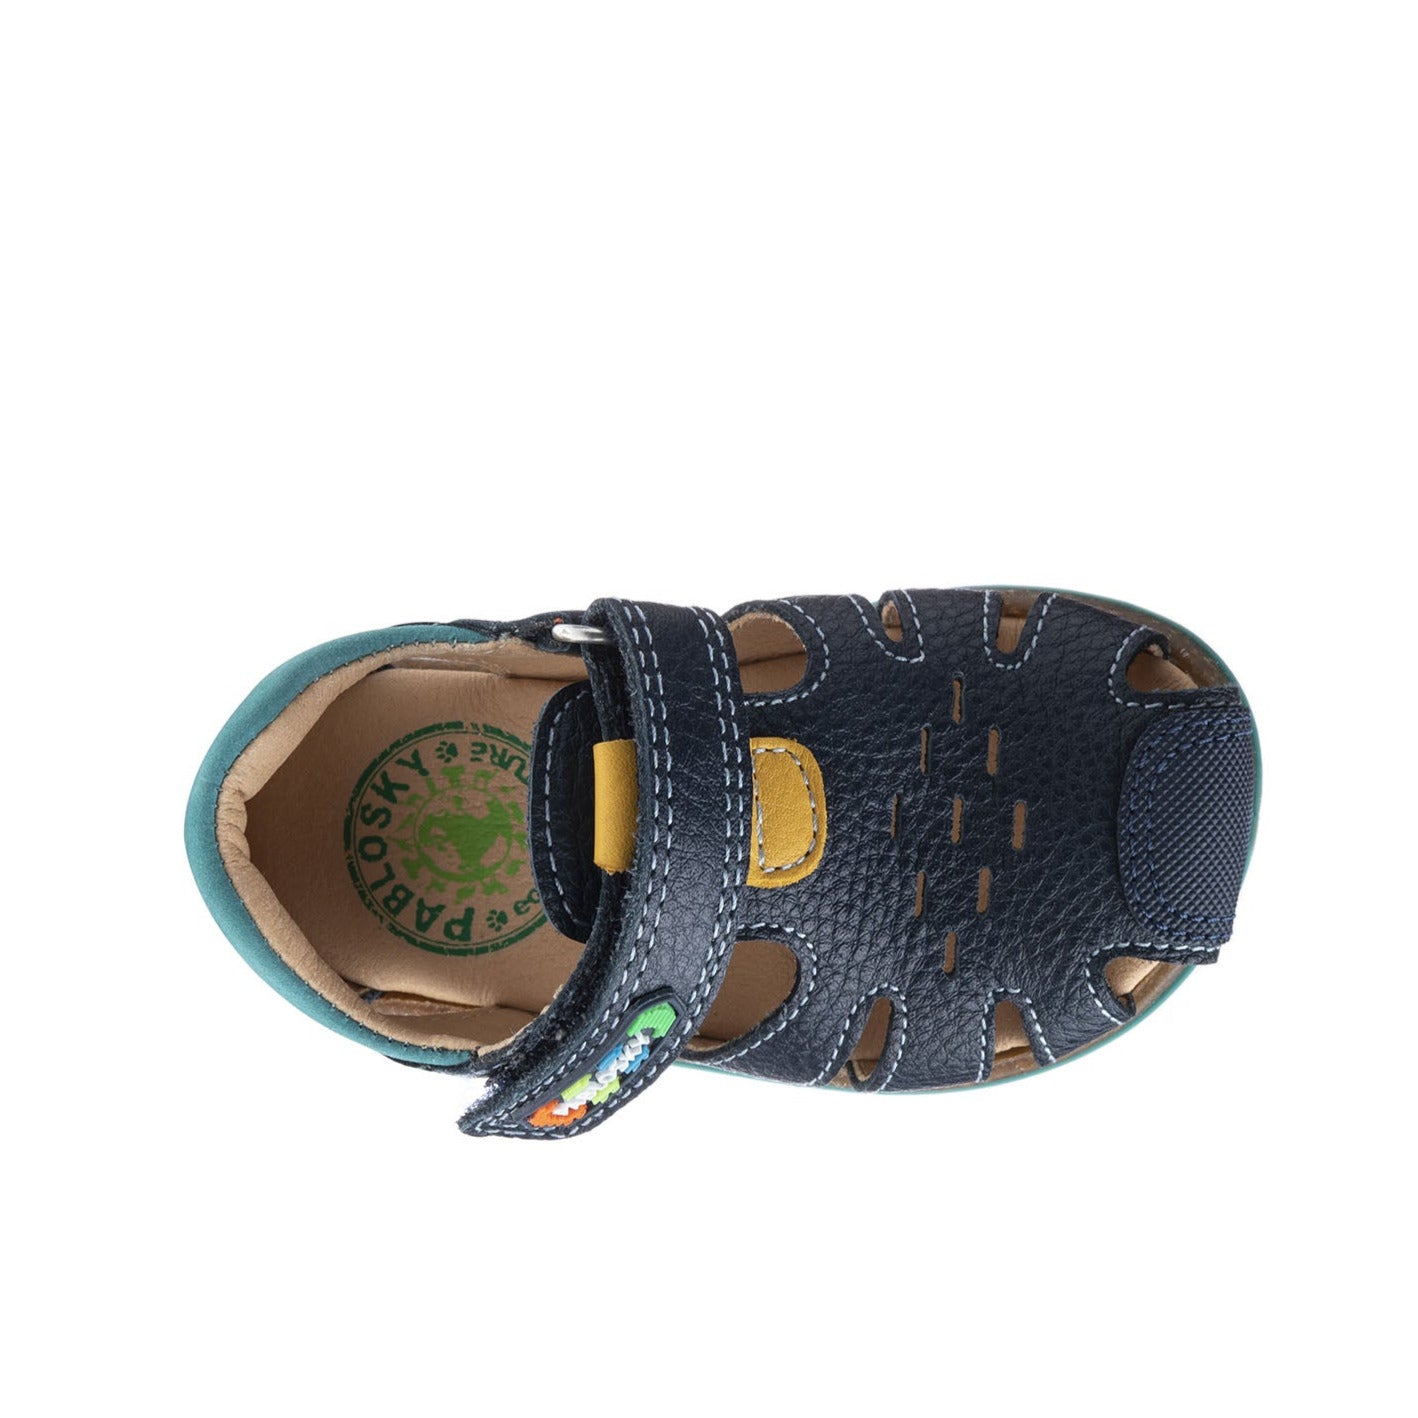 Pablosky Toddler Sandals / 042025